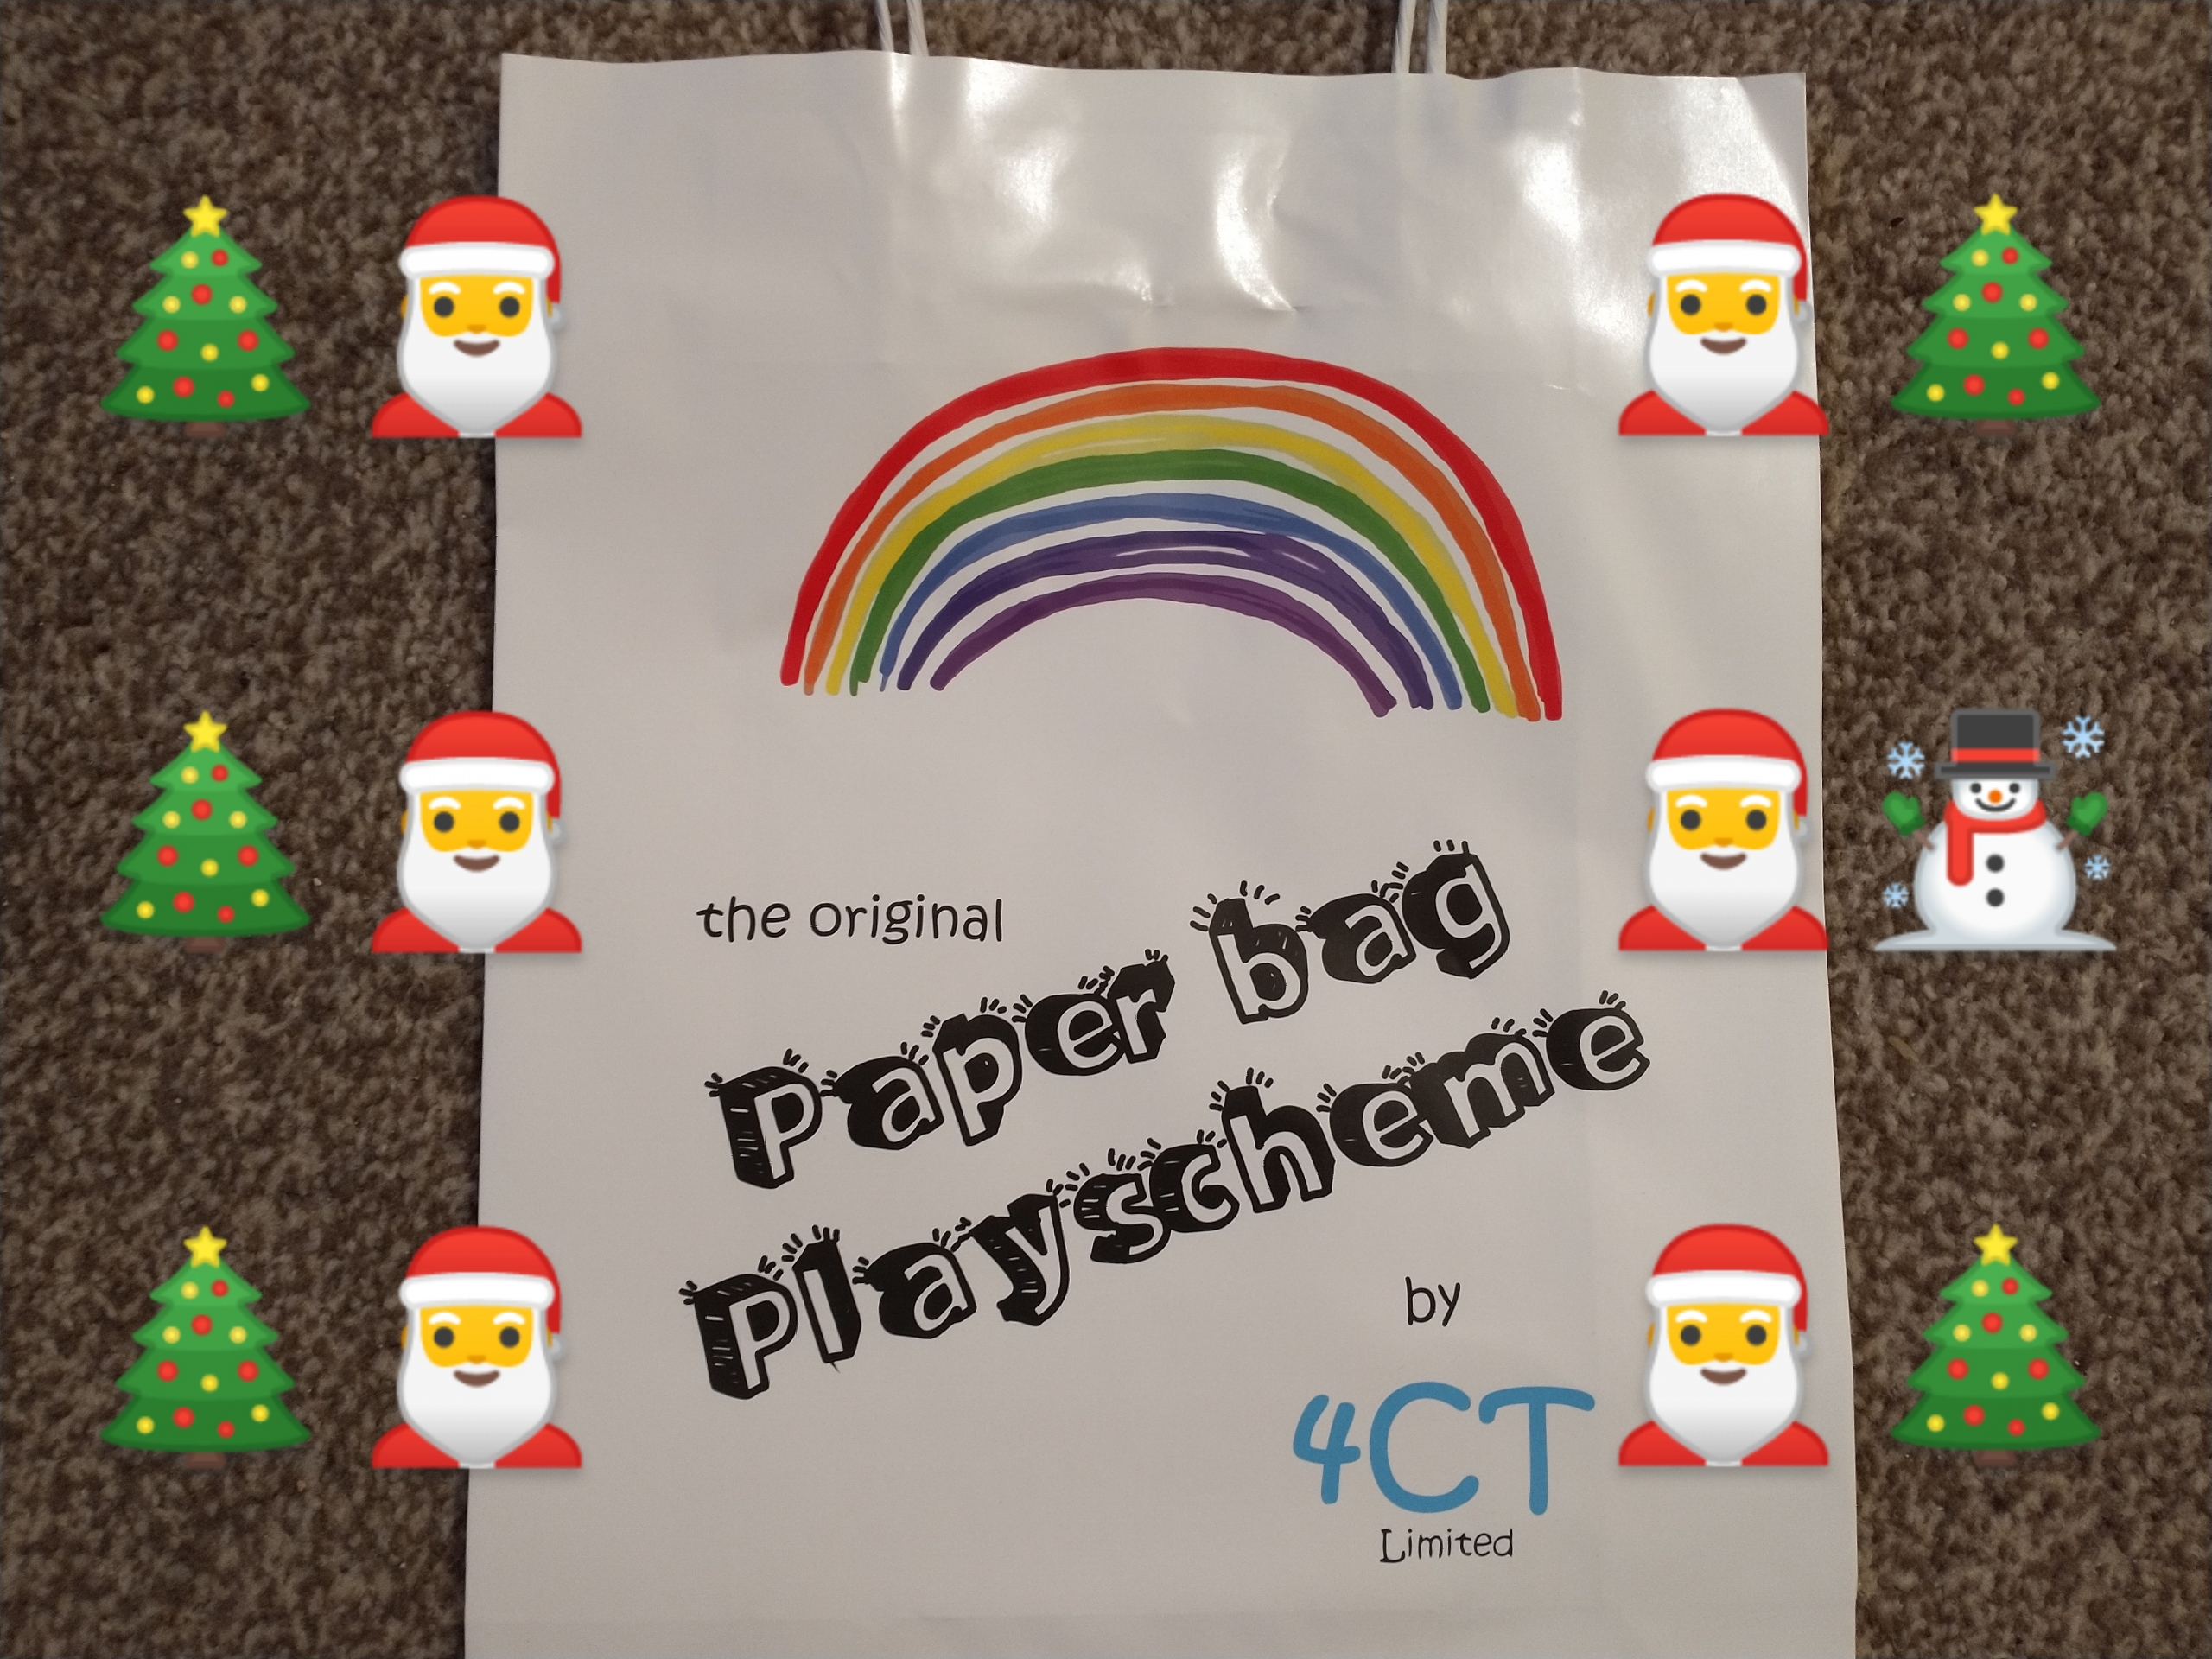 photo of 4CT's original Paperbag Playscheme, overlayed with Christmas tree and Santa emojis